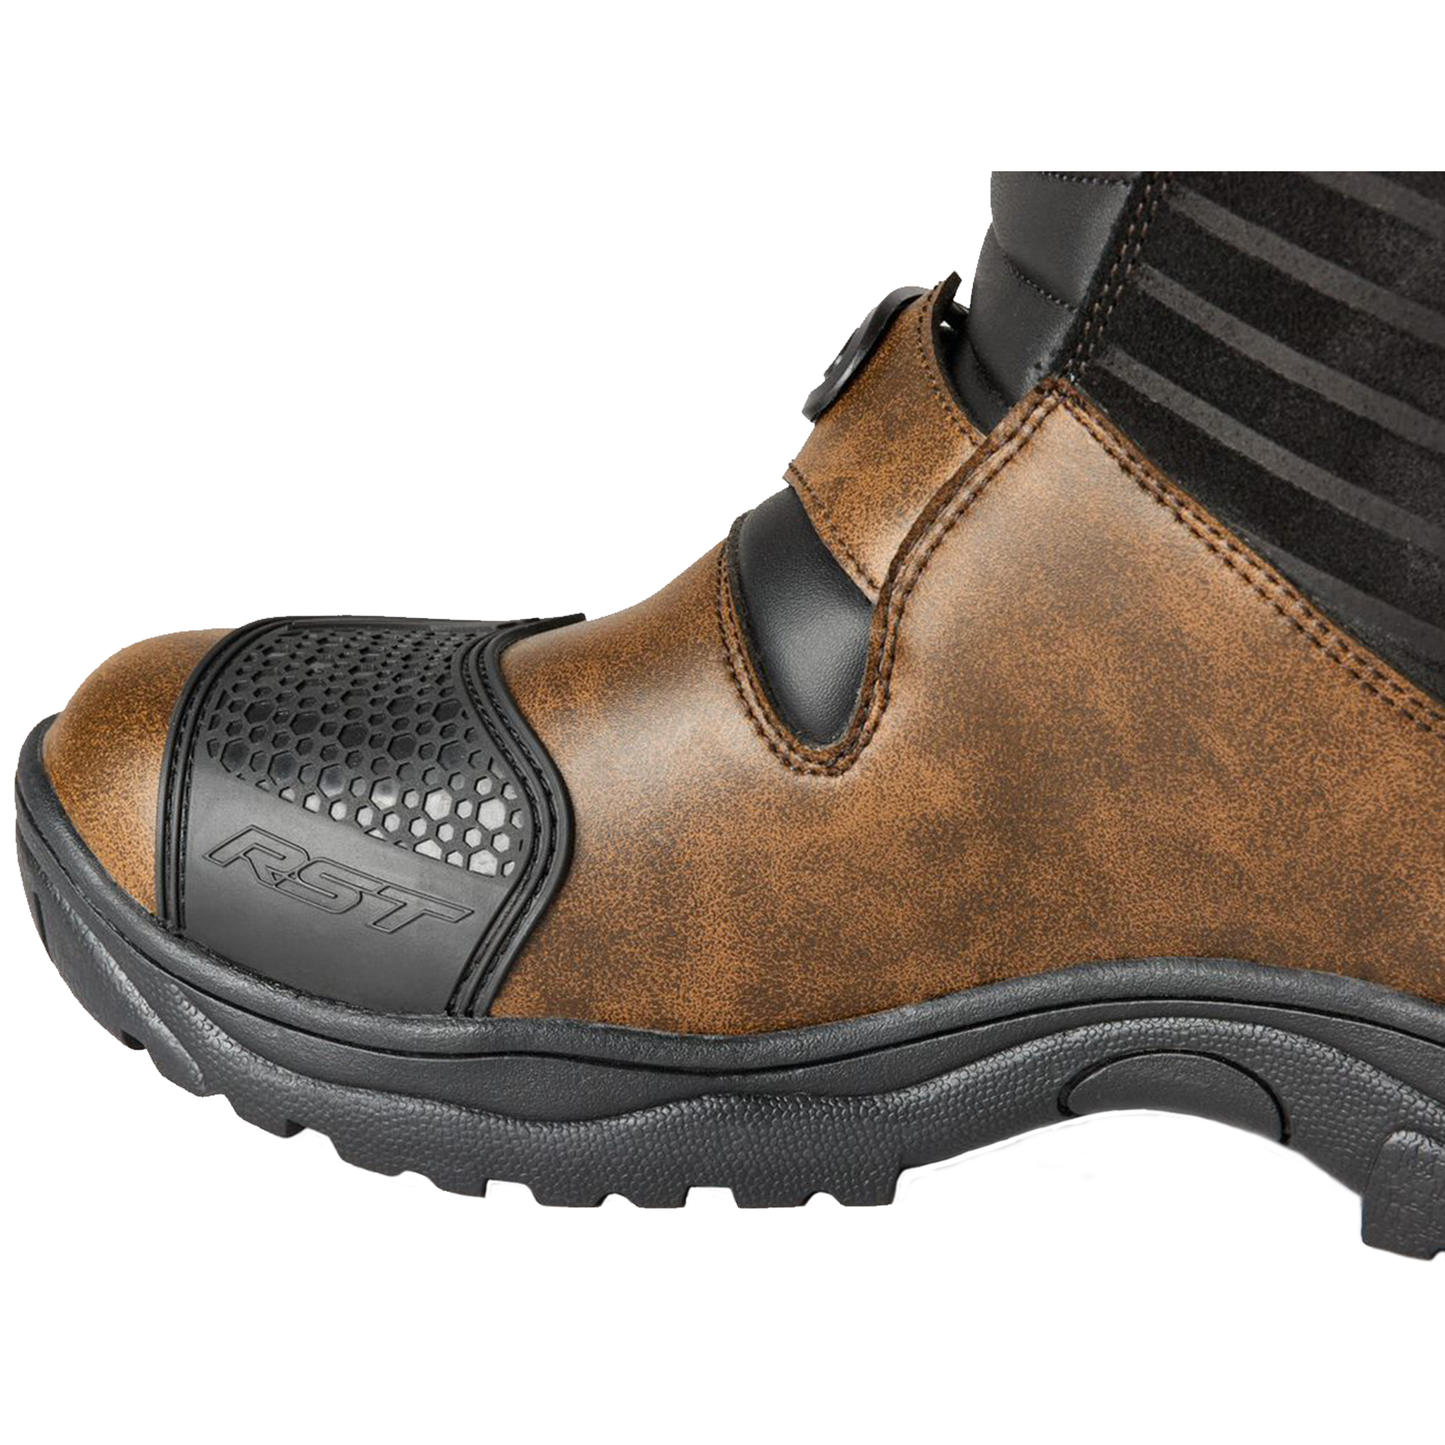 RST Ambush (CE) Waterproof Boots - Brown